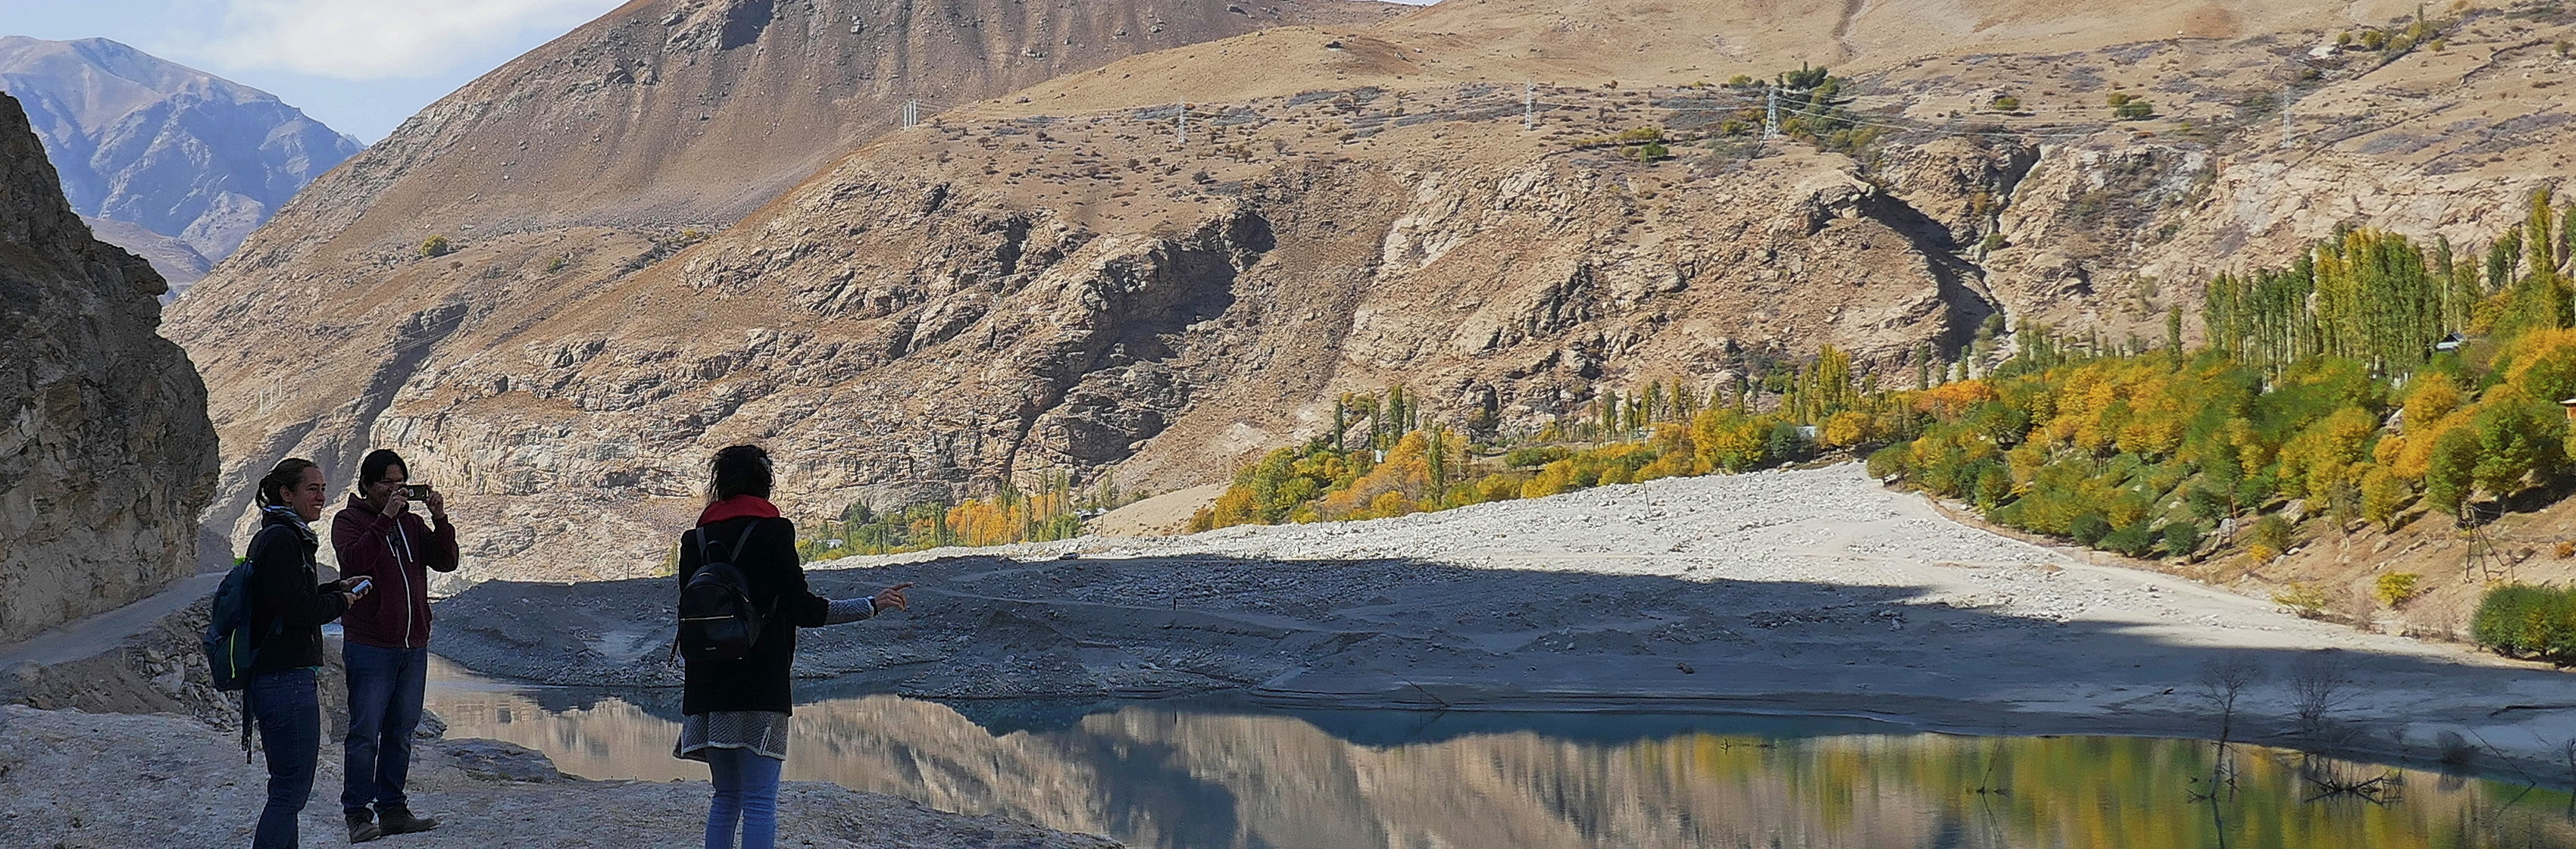 Mountainous region natural hazards: a major debris flow blocks a river and threatens a village in the Pamir Mountains, Tajikistan. Photo F. Jones.